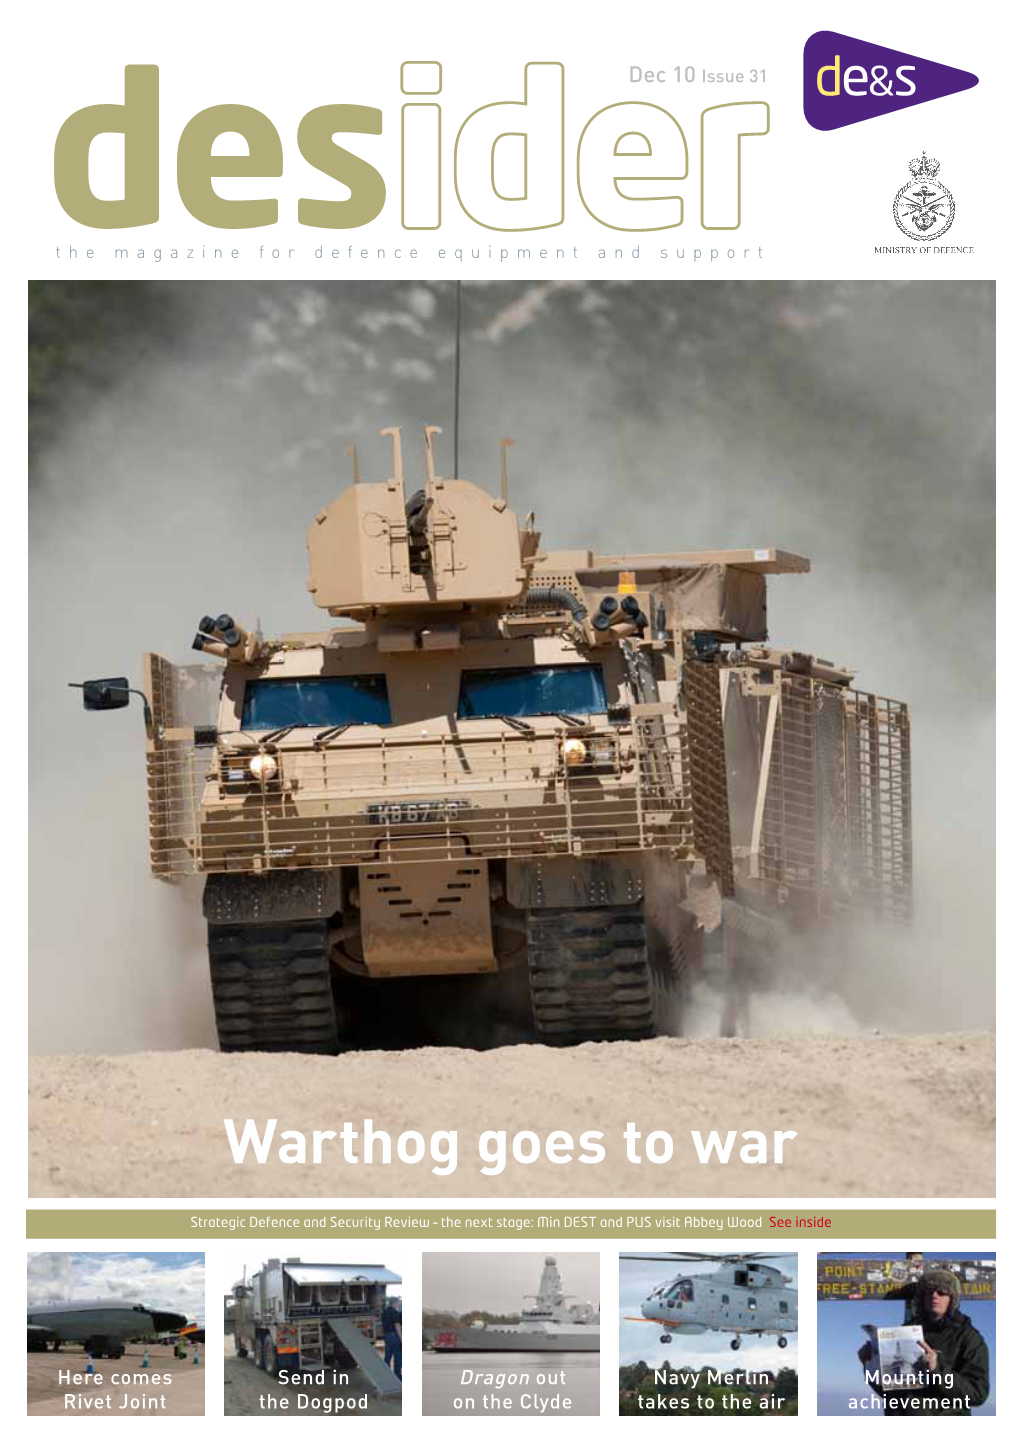 Warthog Goes to War